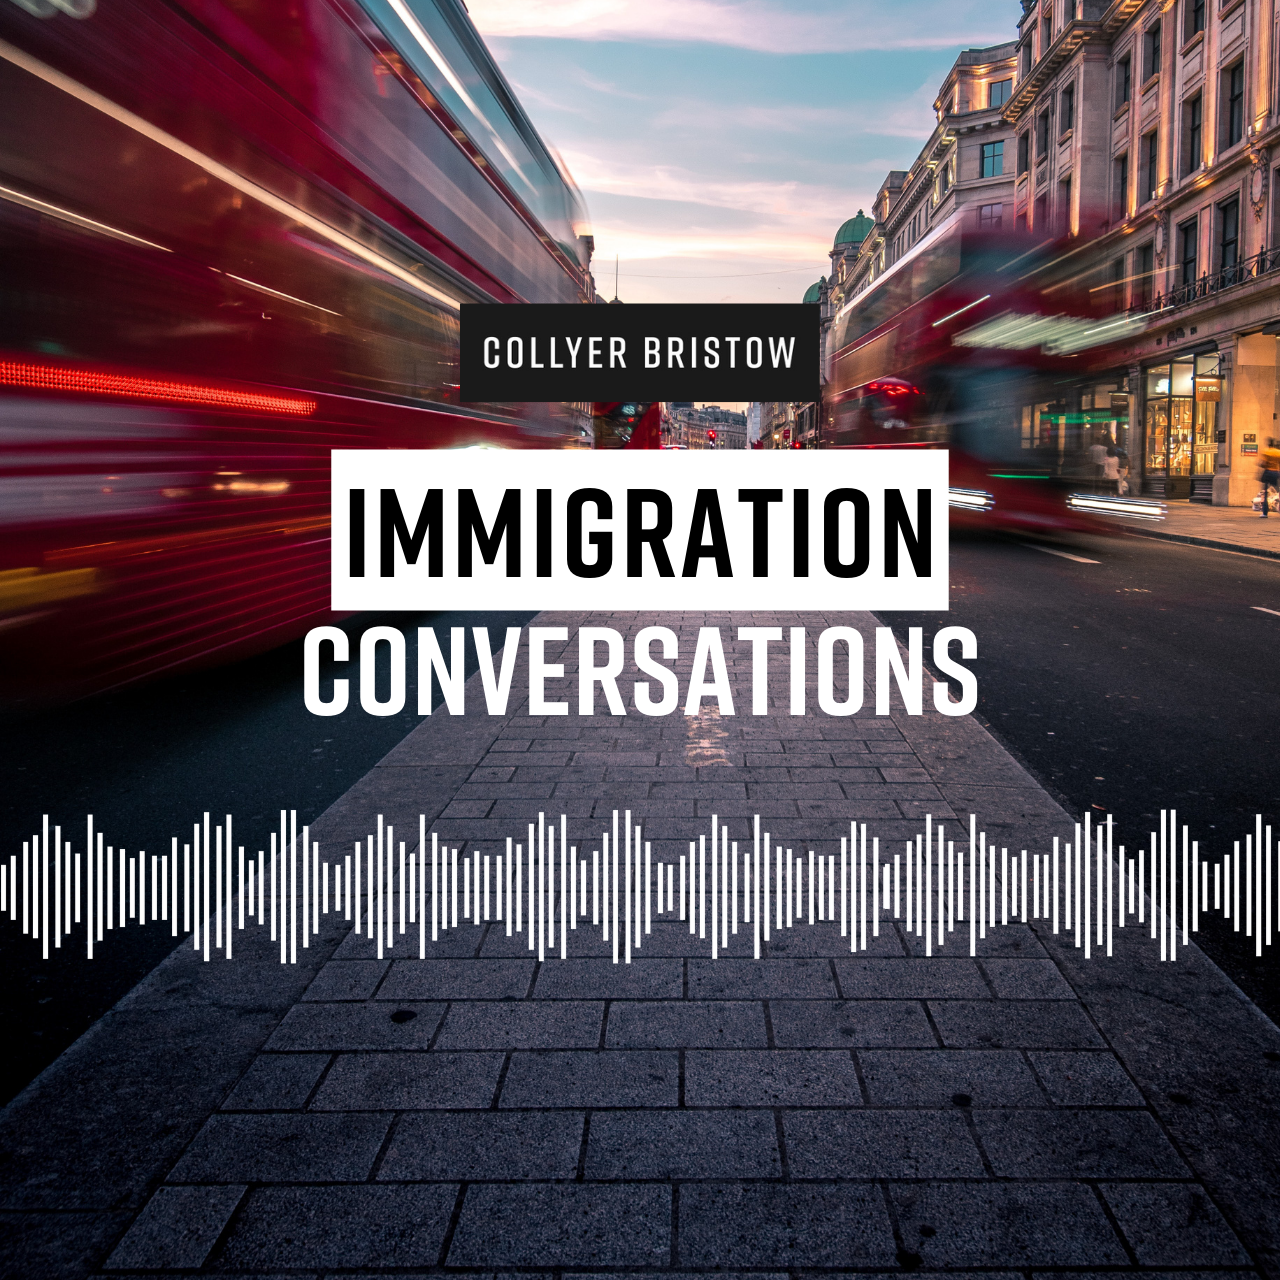 Immigration-conversations-series-visual-square